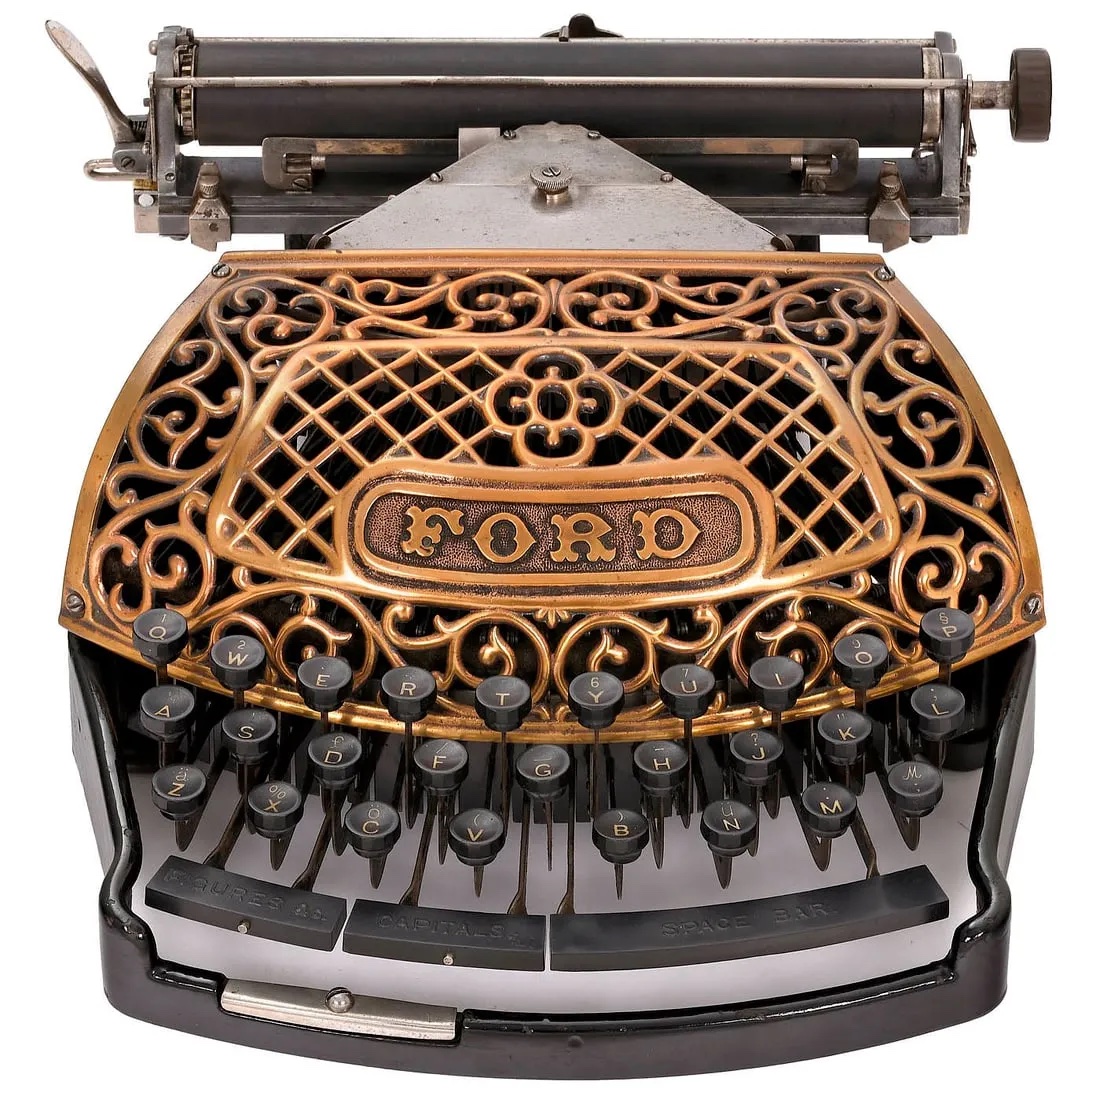 Ford Typewriter dating to 1895, estimated at €16,000-€22,000 ($17,385-$23,905) at Breker.
